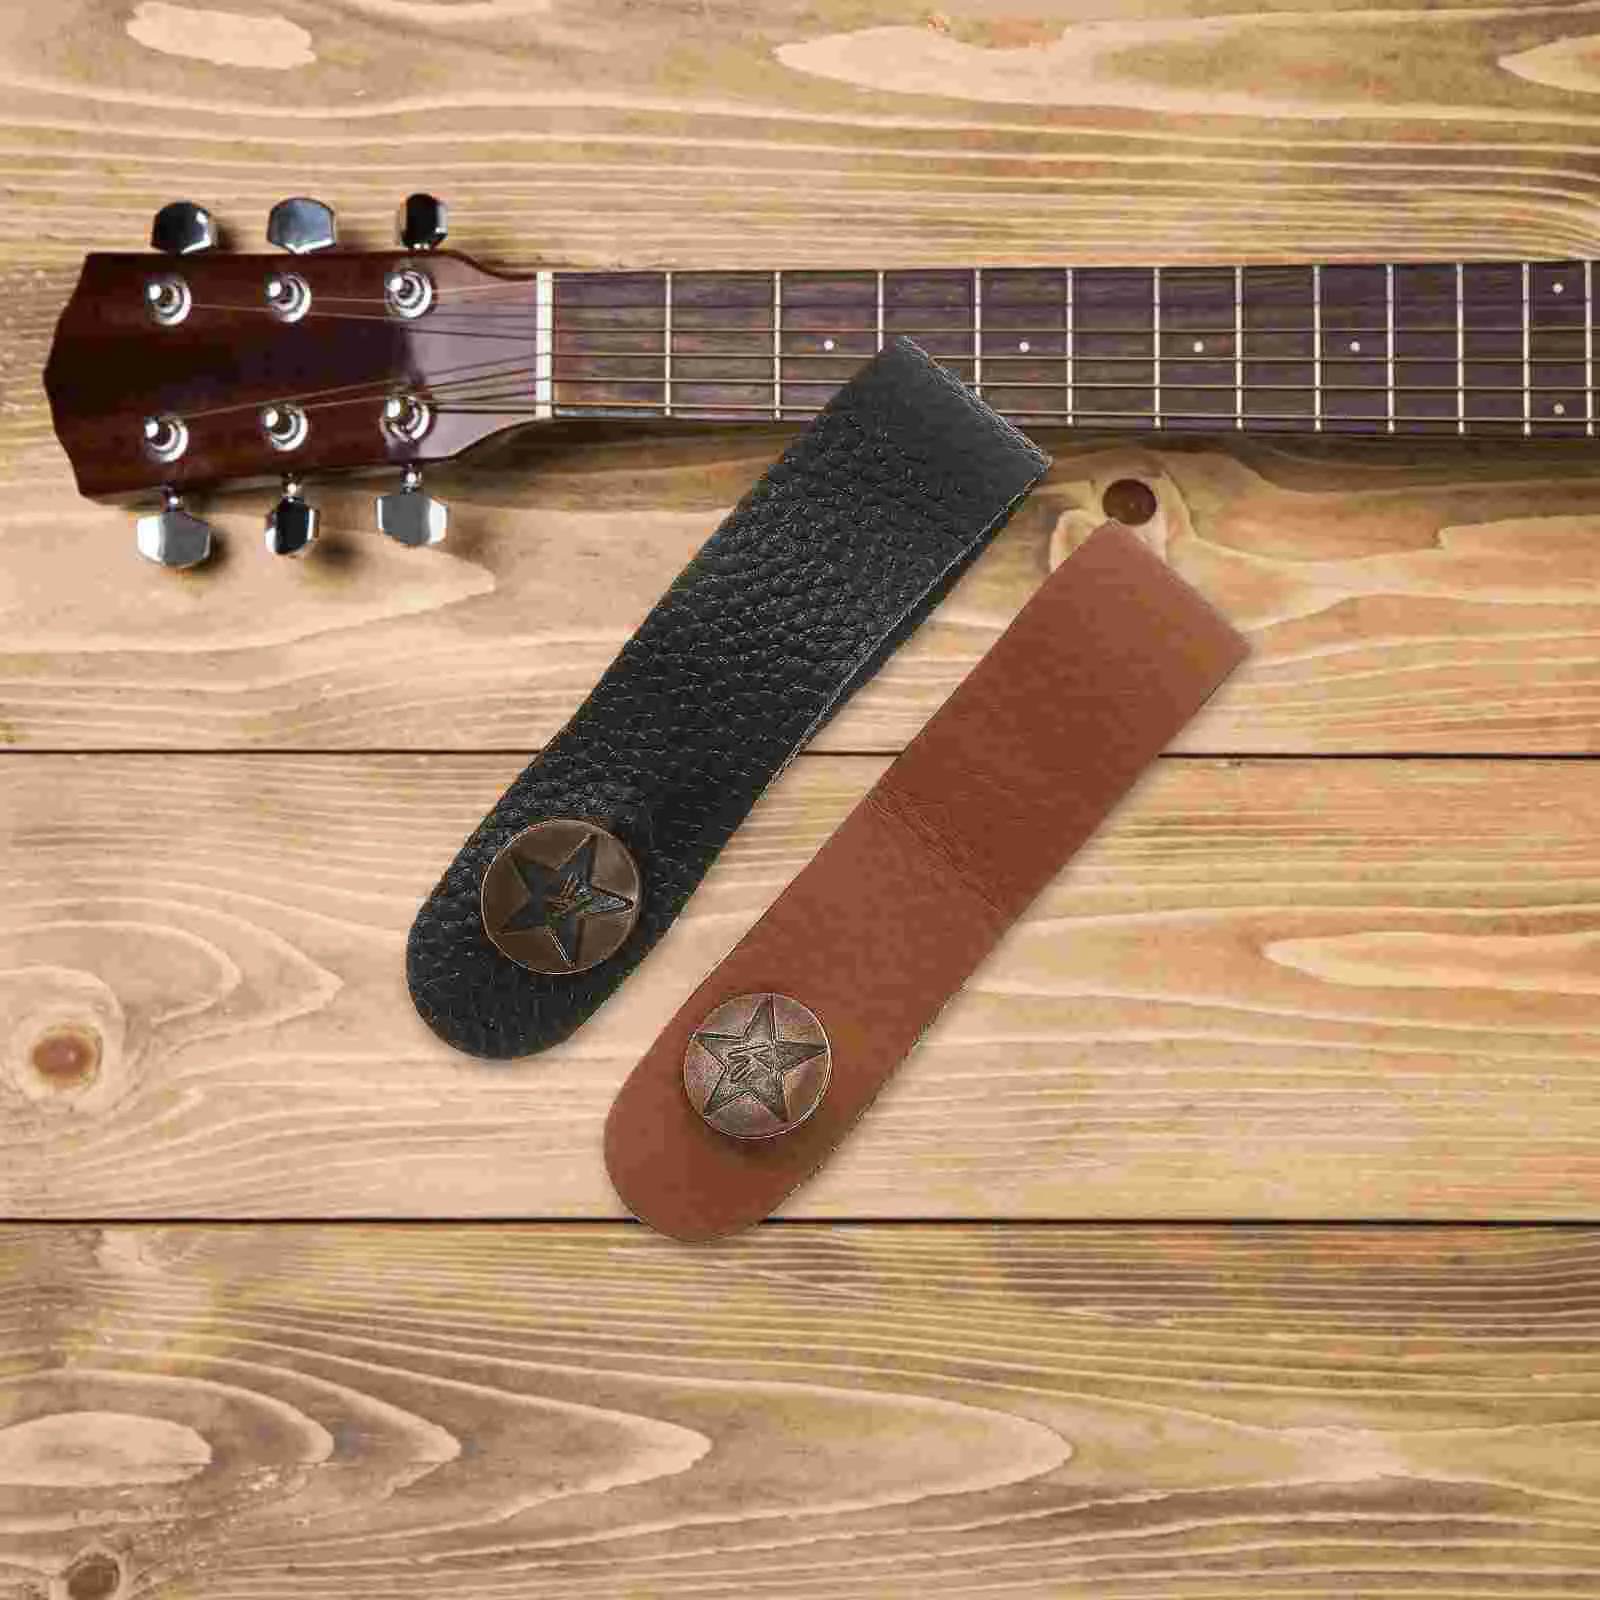 

2pcs Guitar Straps Guitar Neck Straps Button Guitar Headstock Strap Tie for Acoustic Guitar- Black and Brown